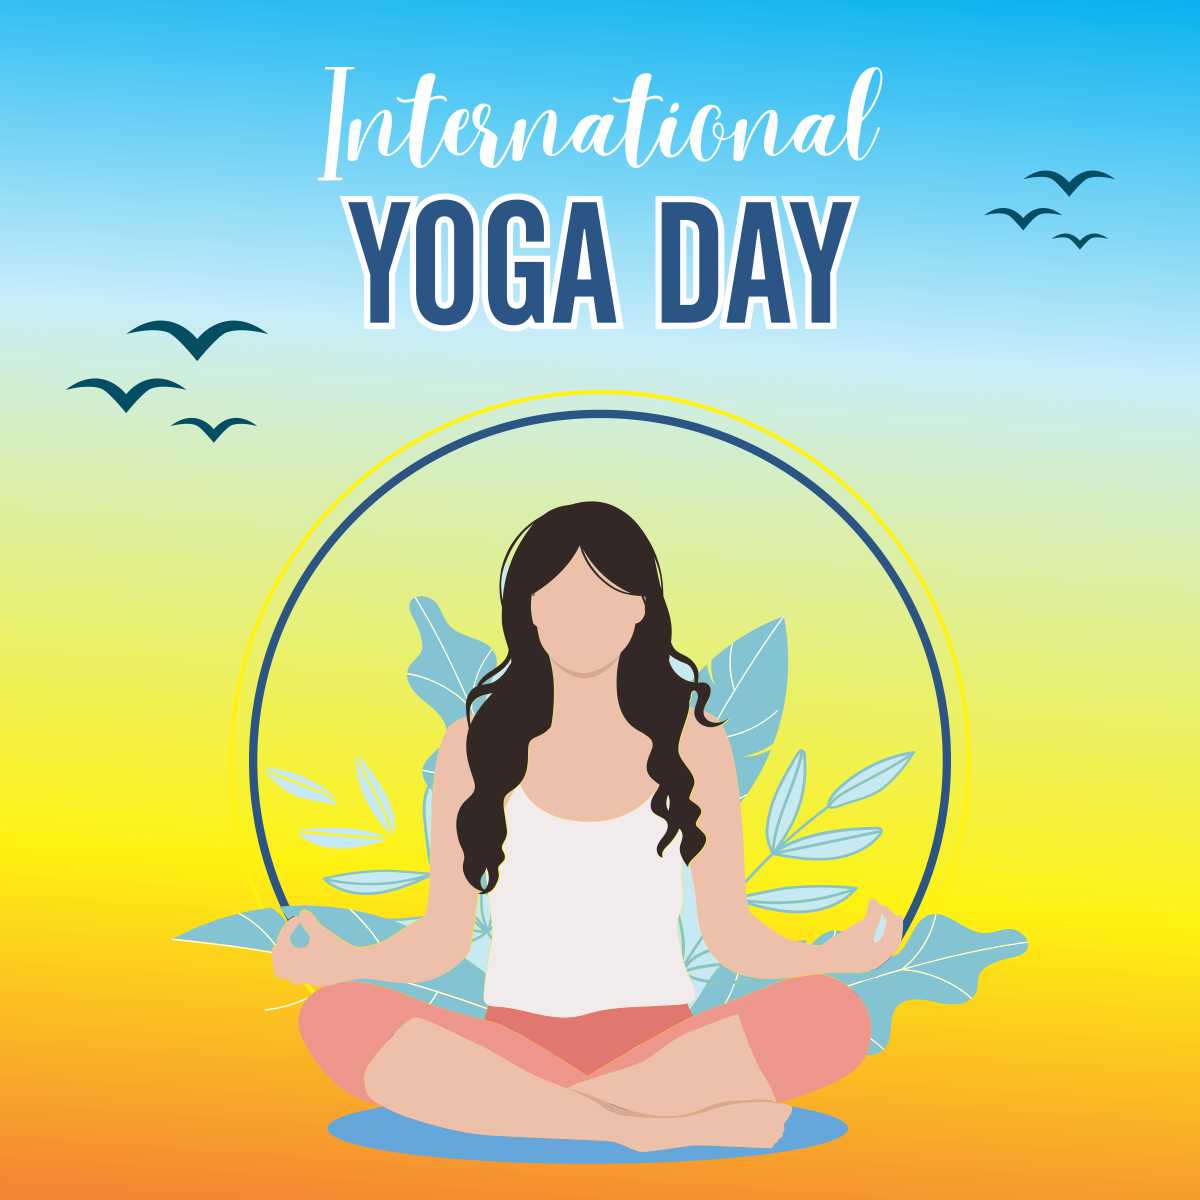 International Yoga Day stock vector. Illustration of prayer - 117016707-saigonsouth.com.vn